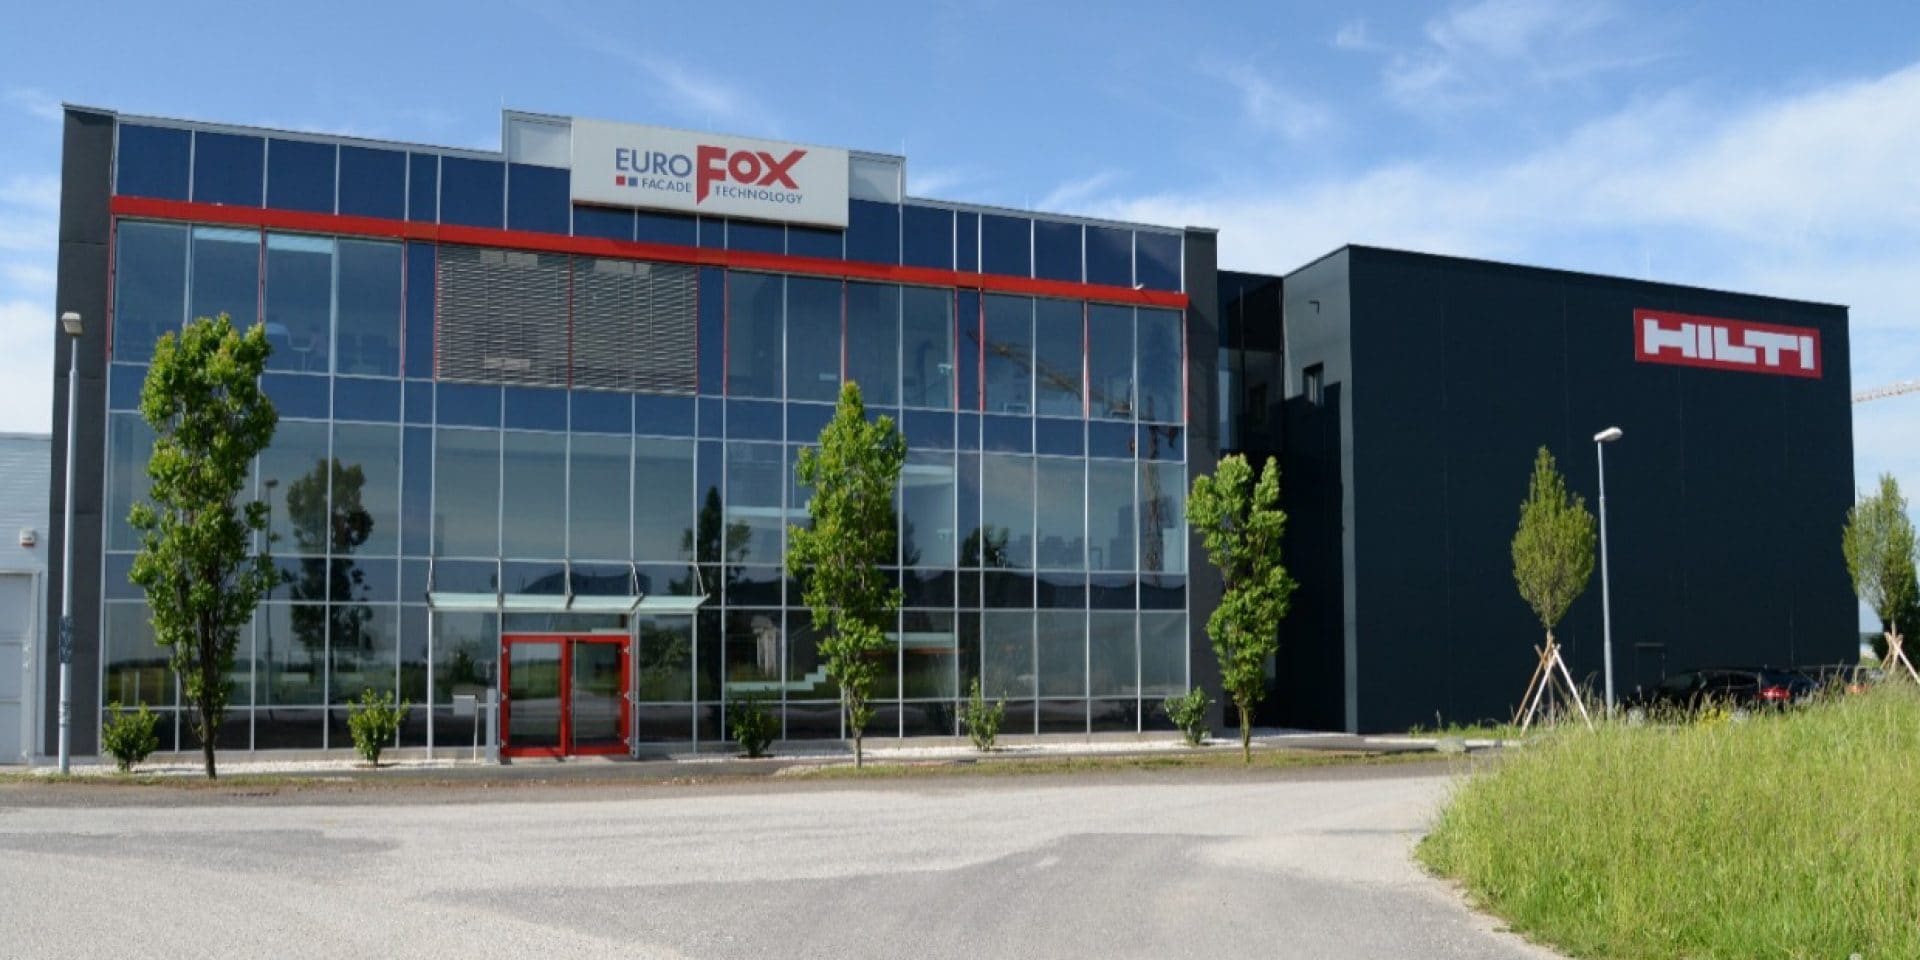 Fábrica Eurofox da Hilti em Lanzenkirchen, na Áustria